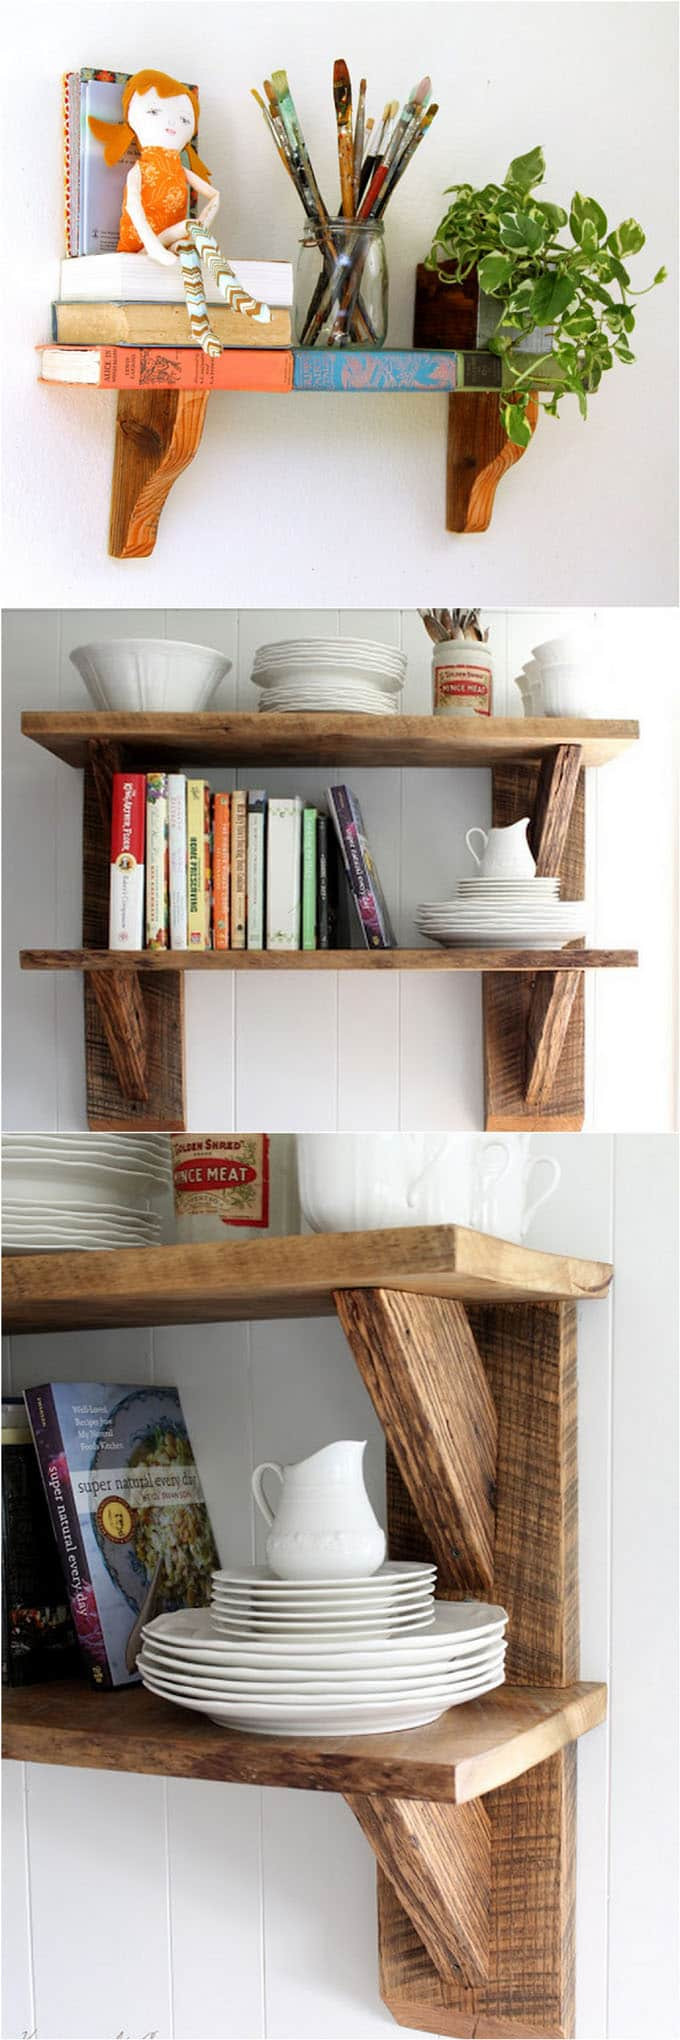 DIY Floating Shelf Brackets
 16 Easy and Stylish DIY Floating Shelves & Wall Shelves